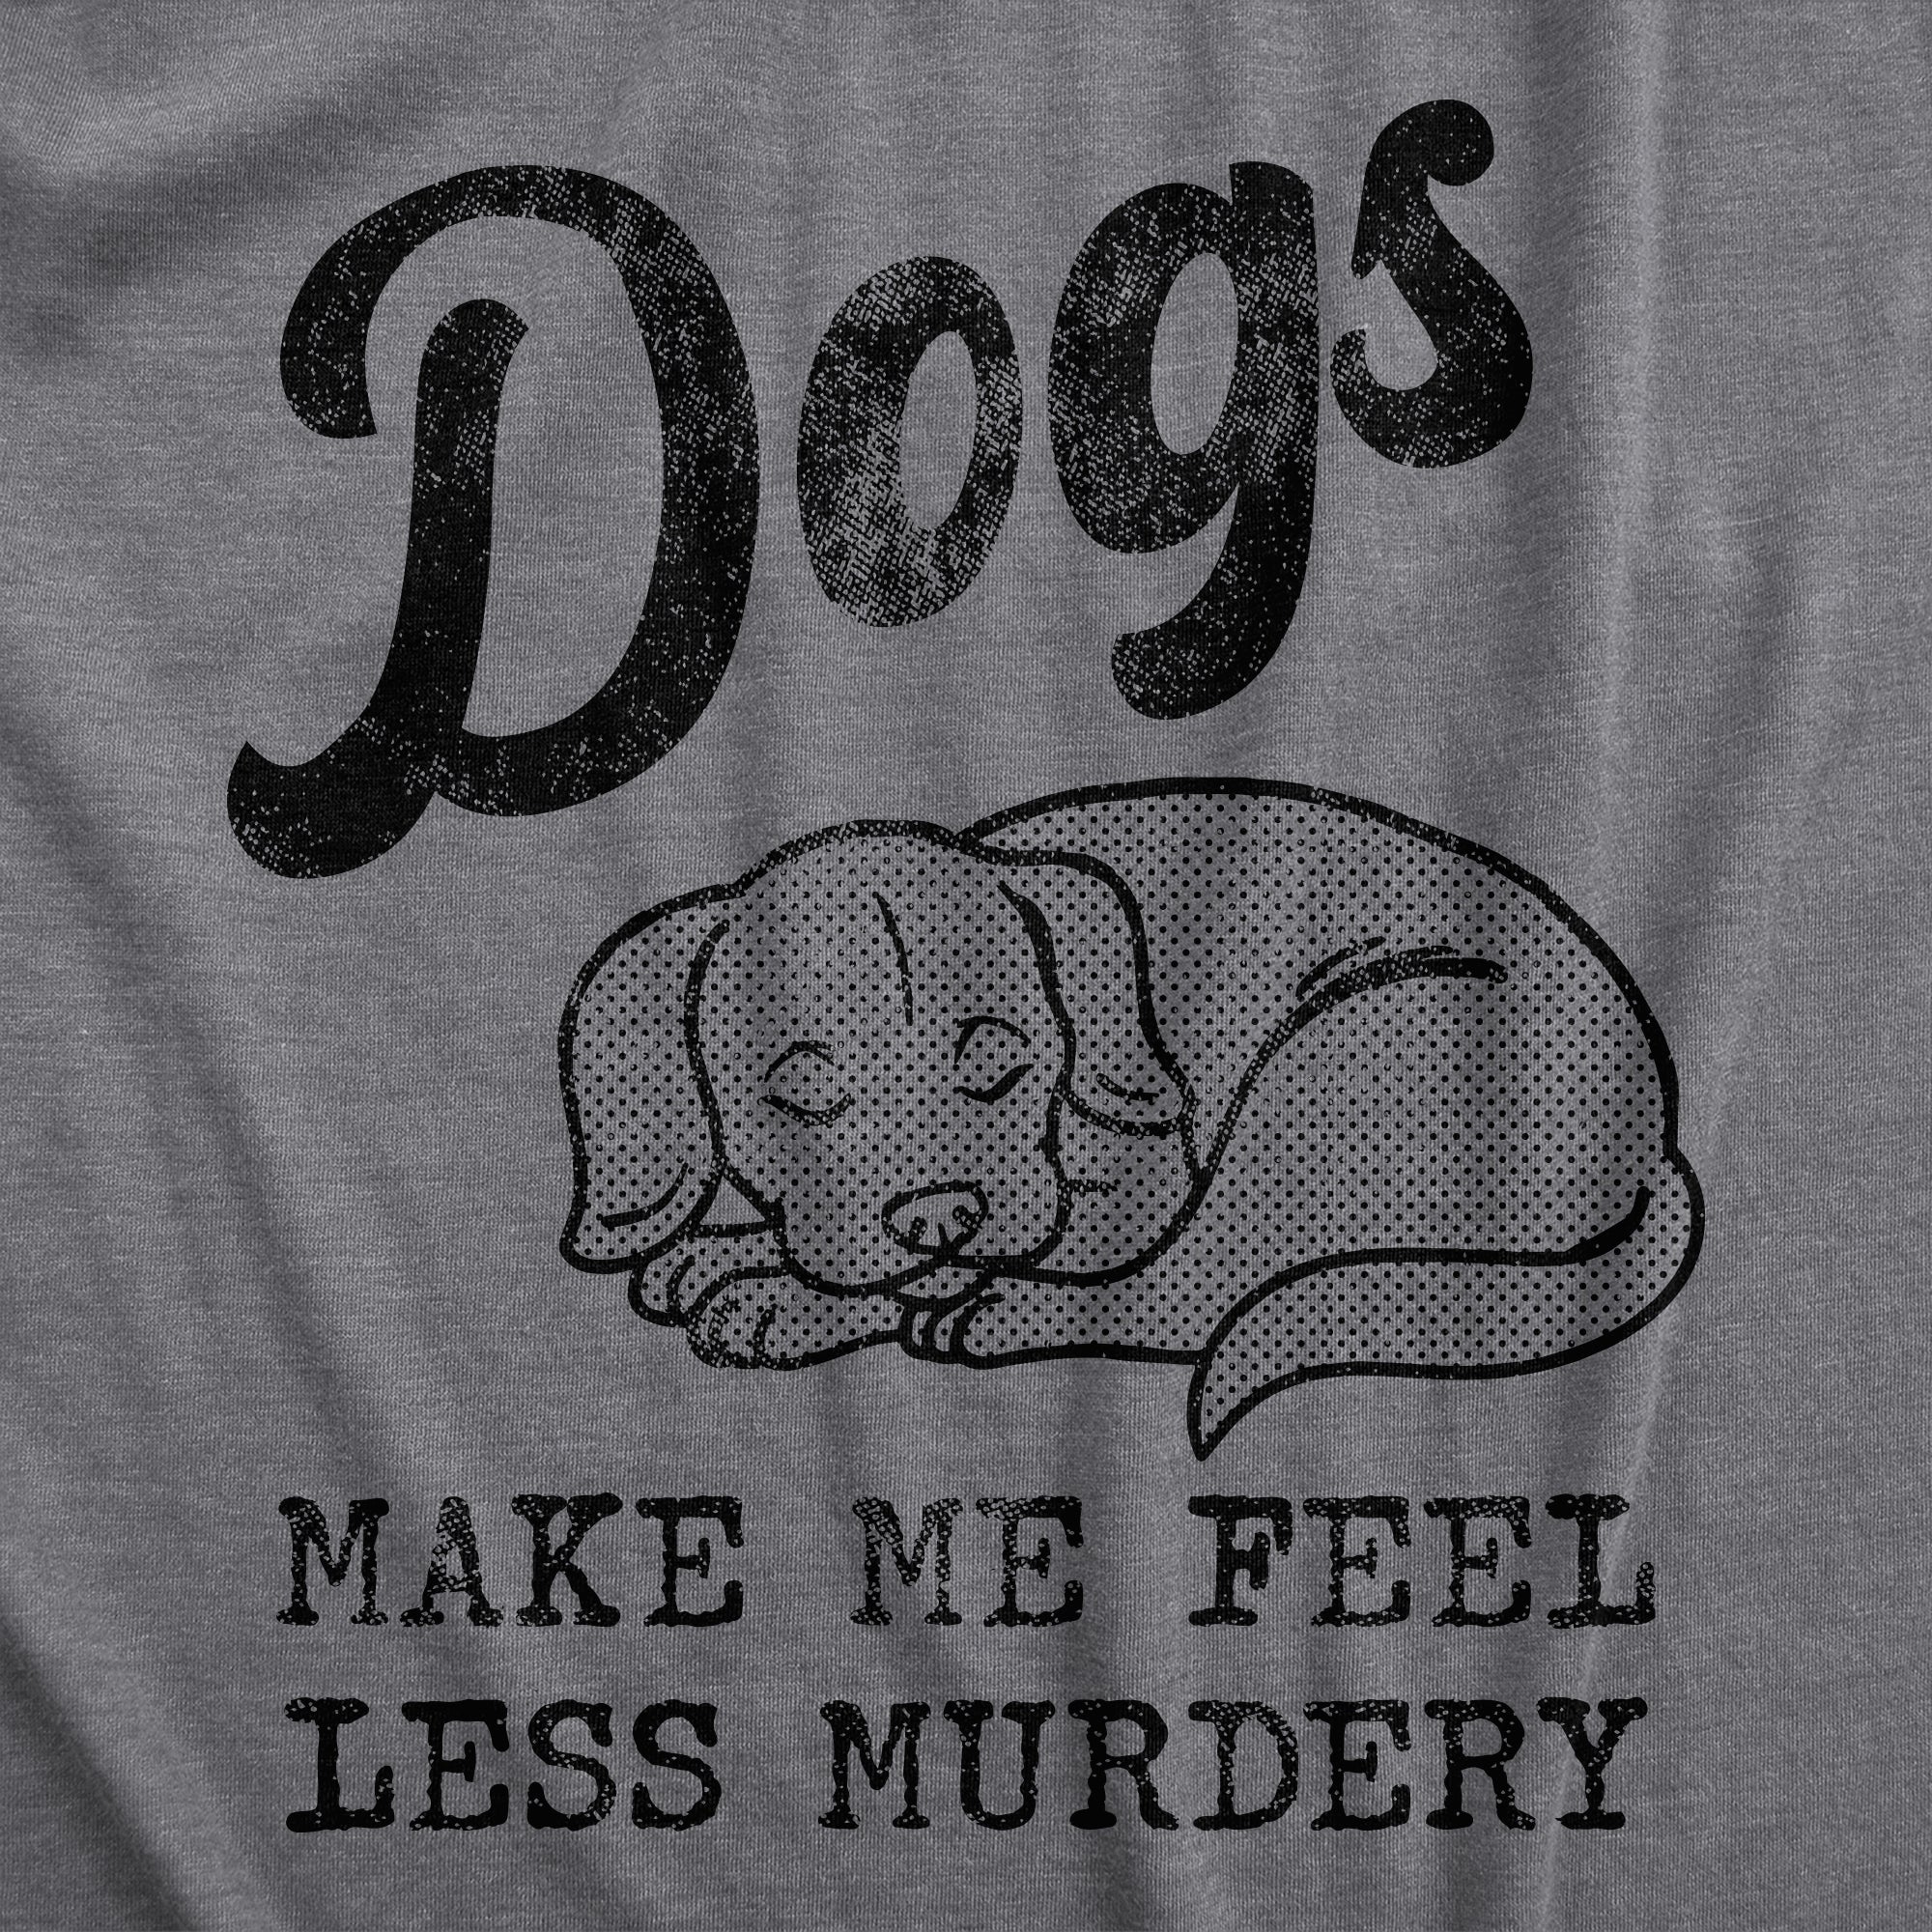 Funny Dark Heather Grey Dogs Make Me Feel Less Murdery Womens T Shirt Nerdy Dog Tee